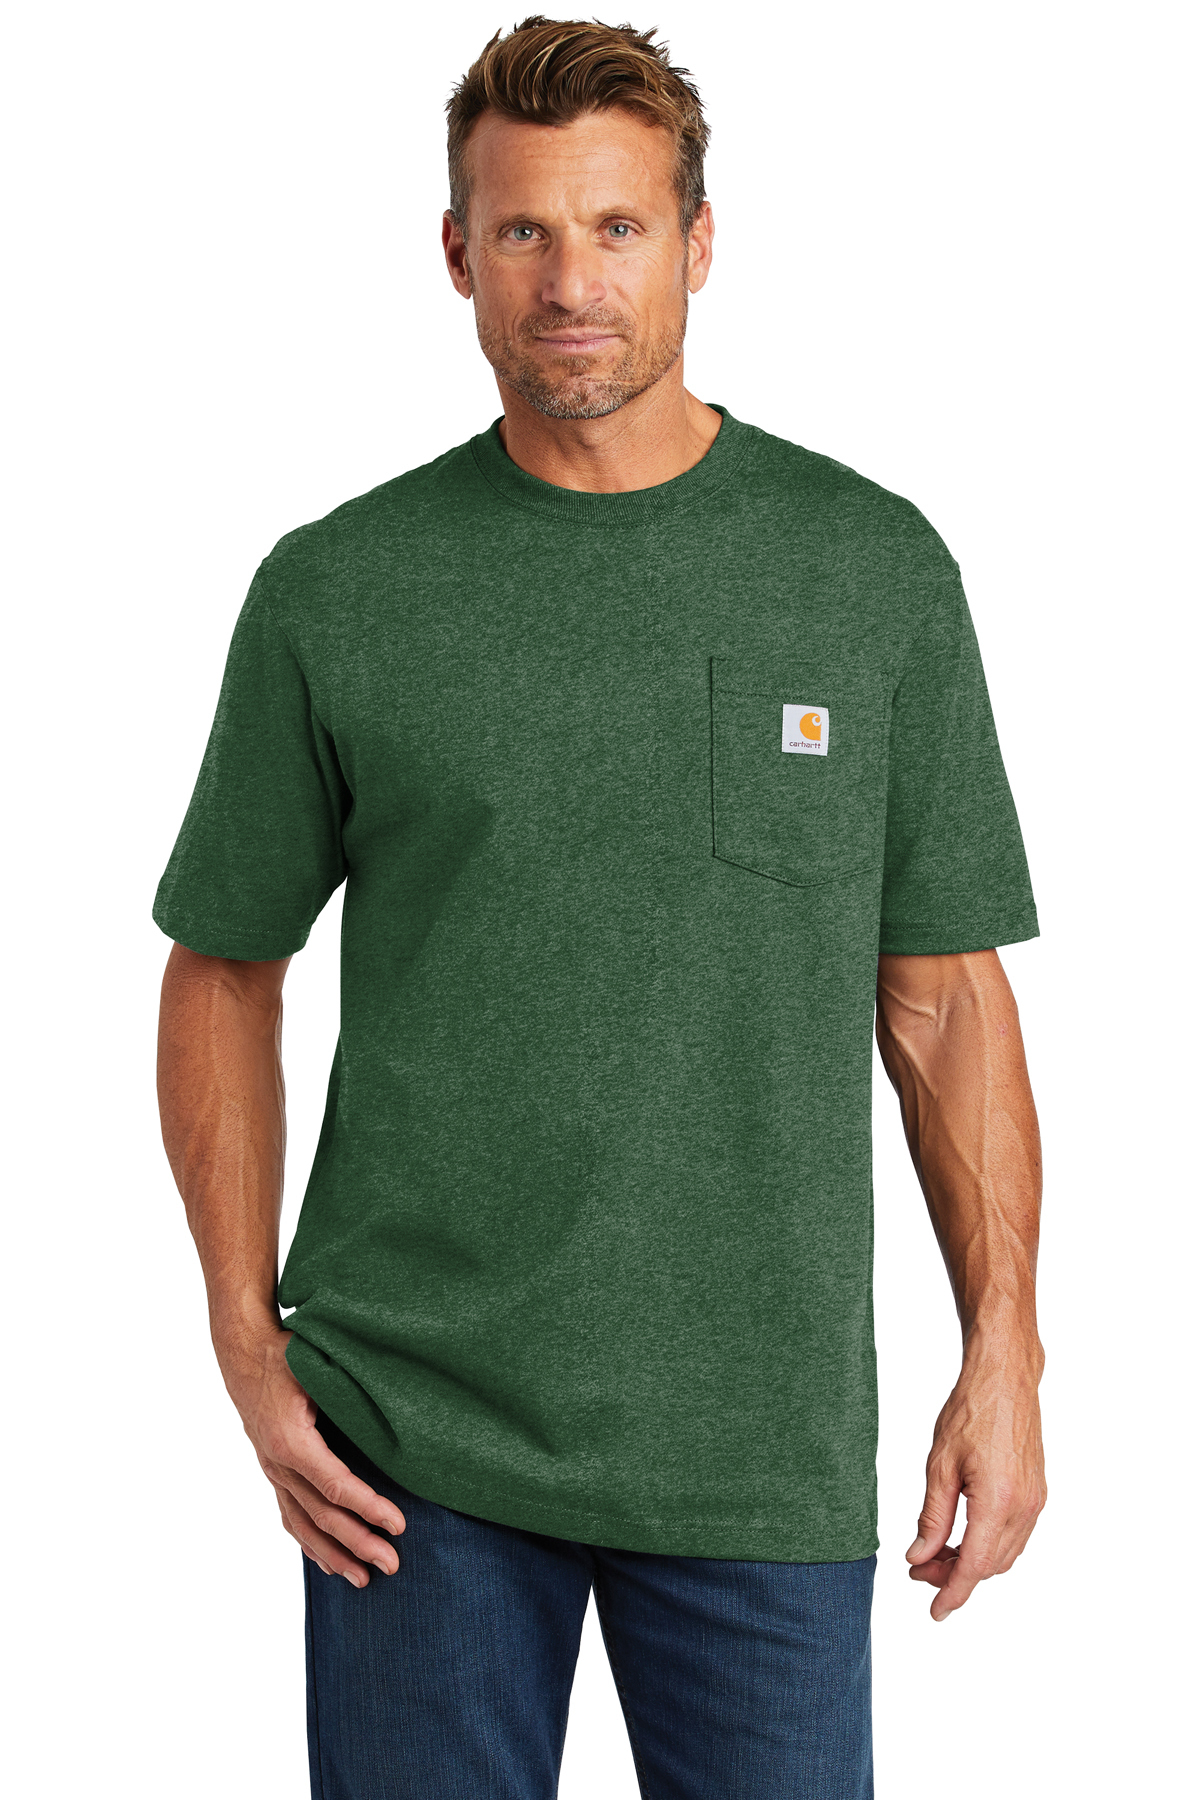 Carhartt Workwear Pocket Short Sleeve T-Shirt | Product | SanMar